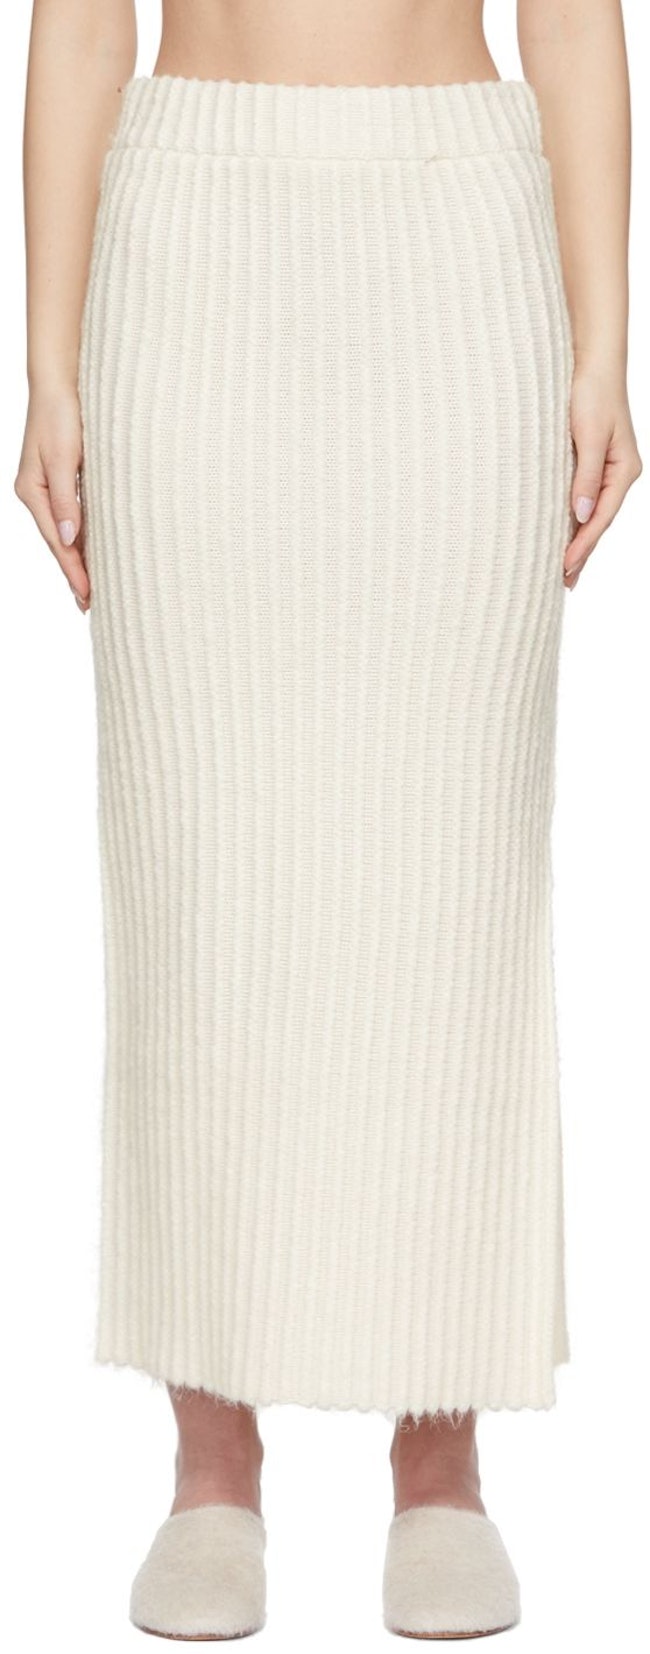 Off-White Kilea Skirt: image 1